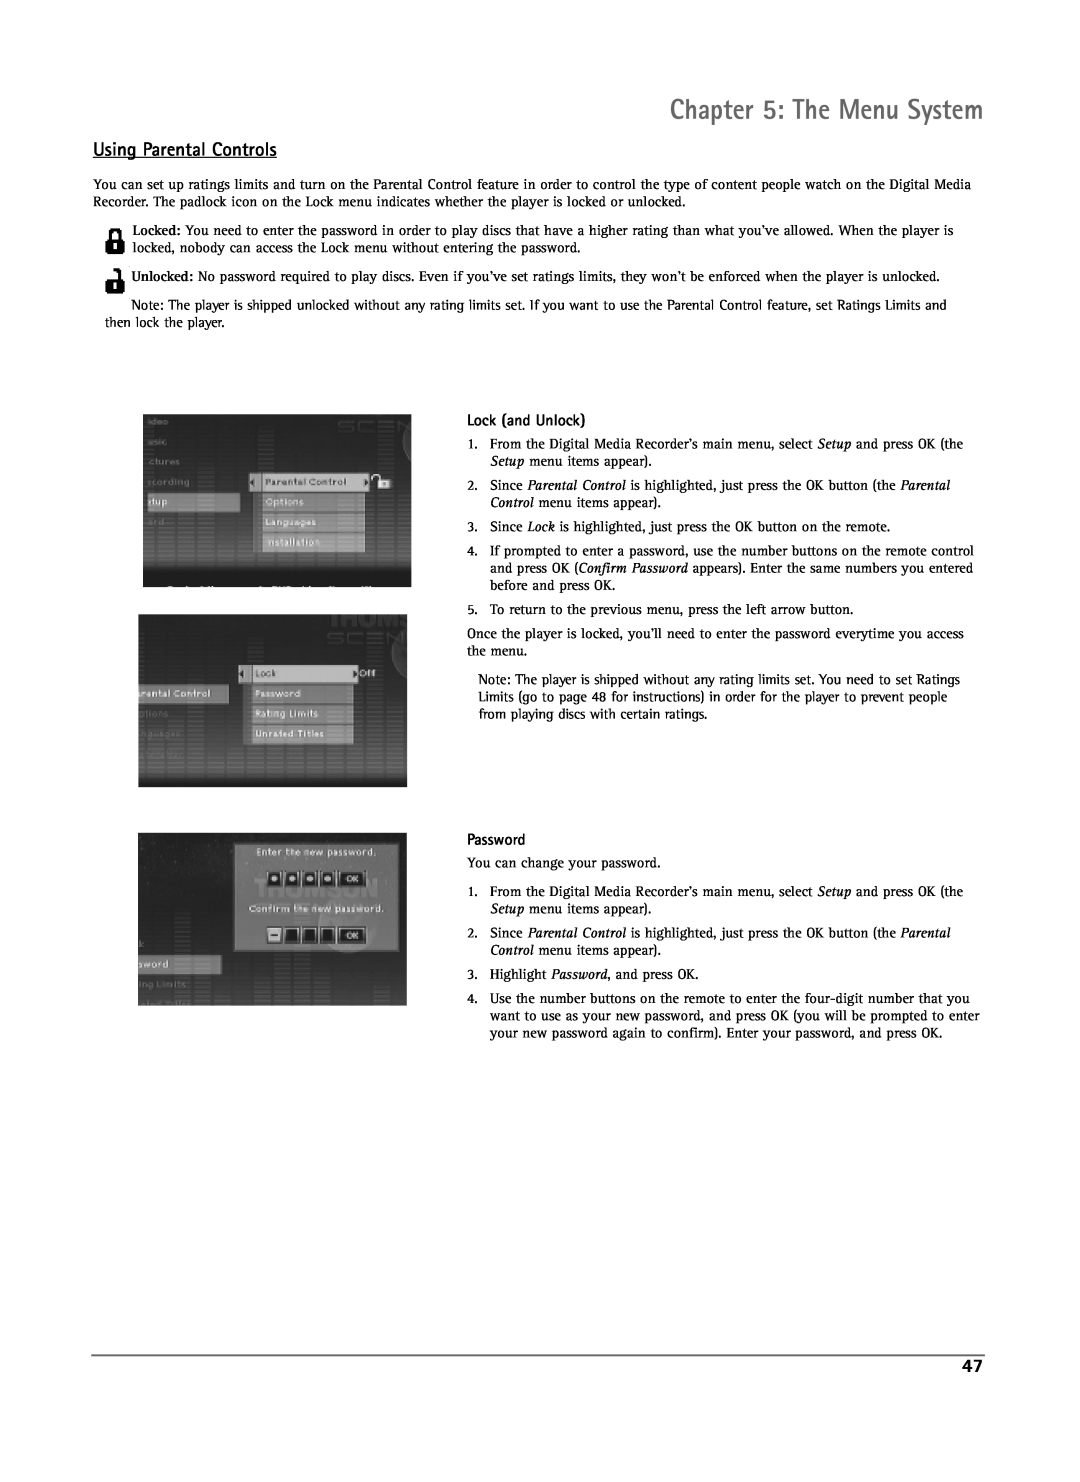 RCA DRS7000N manual The Menu System, Using Parental Controls, Lock and Unlock, Password 